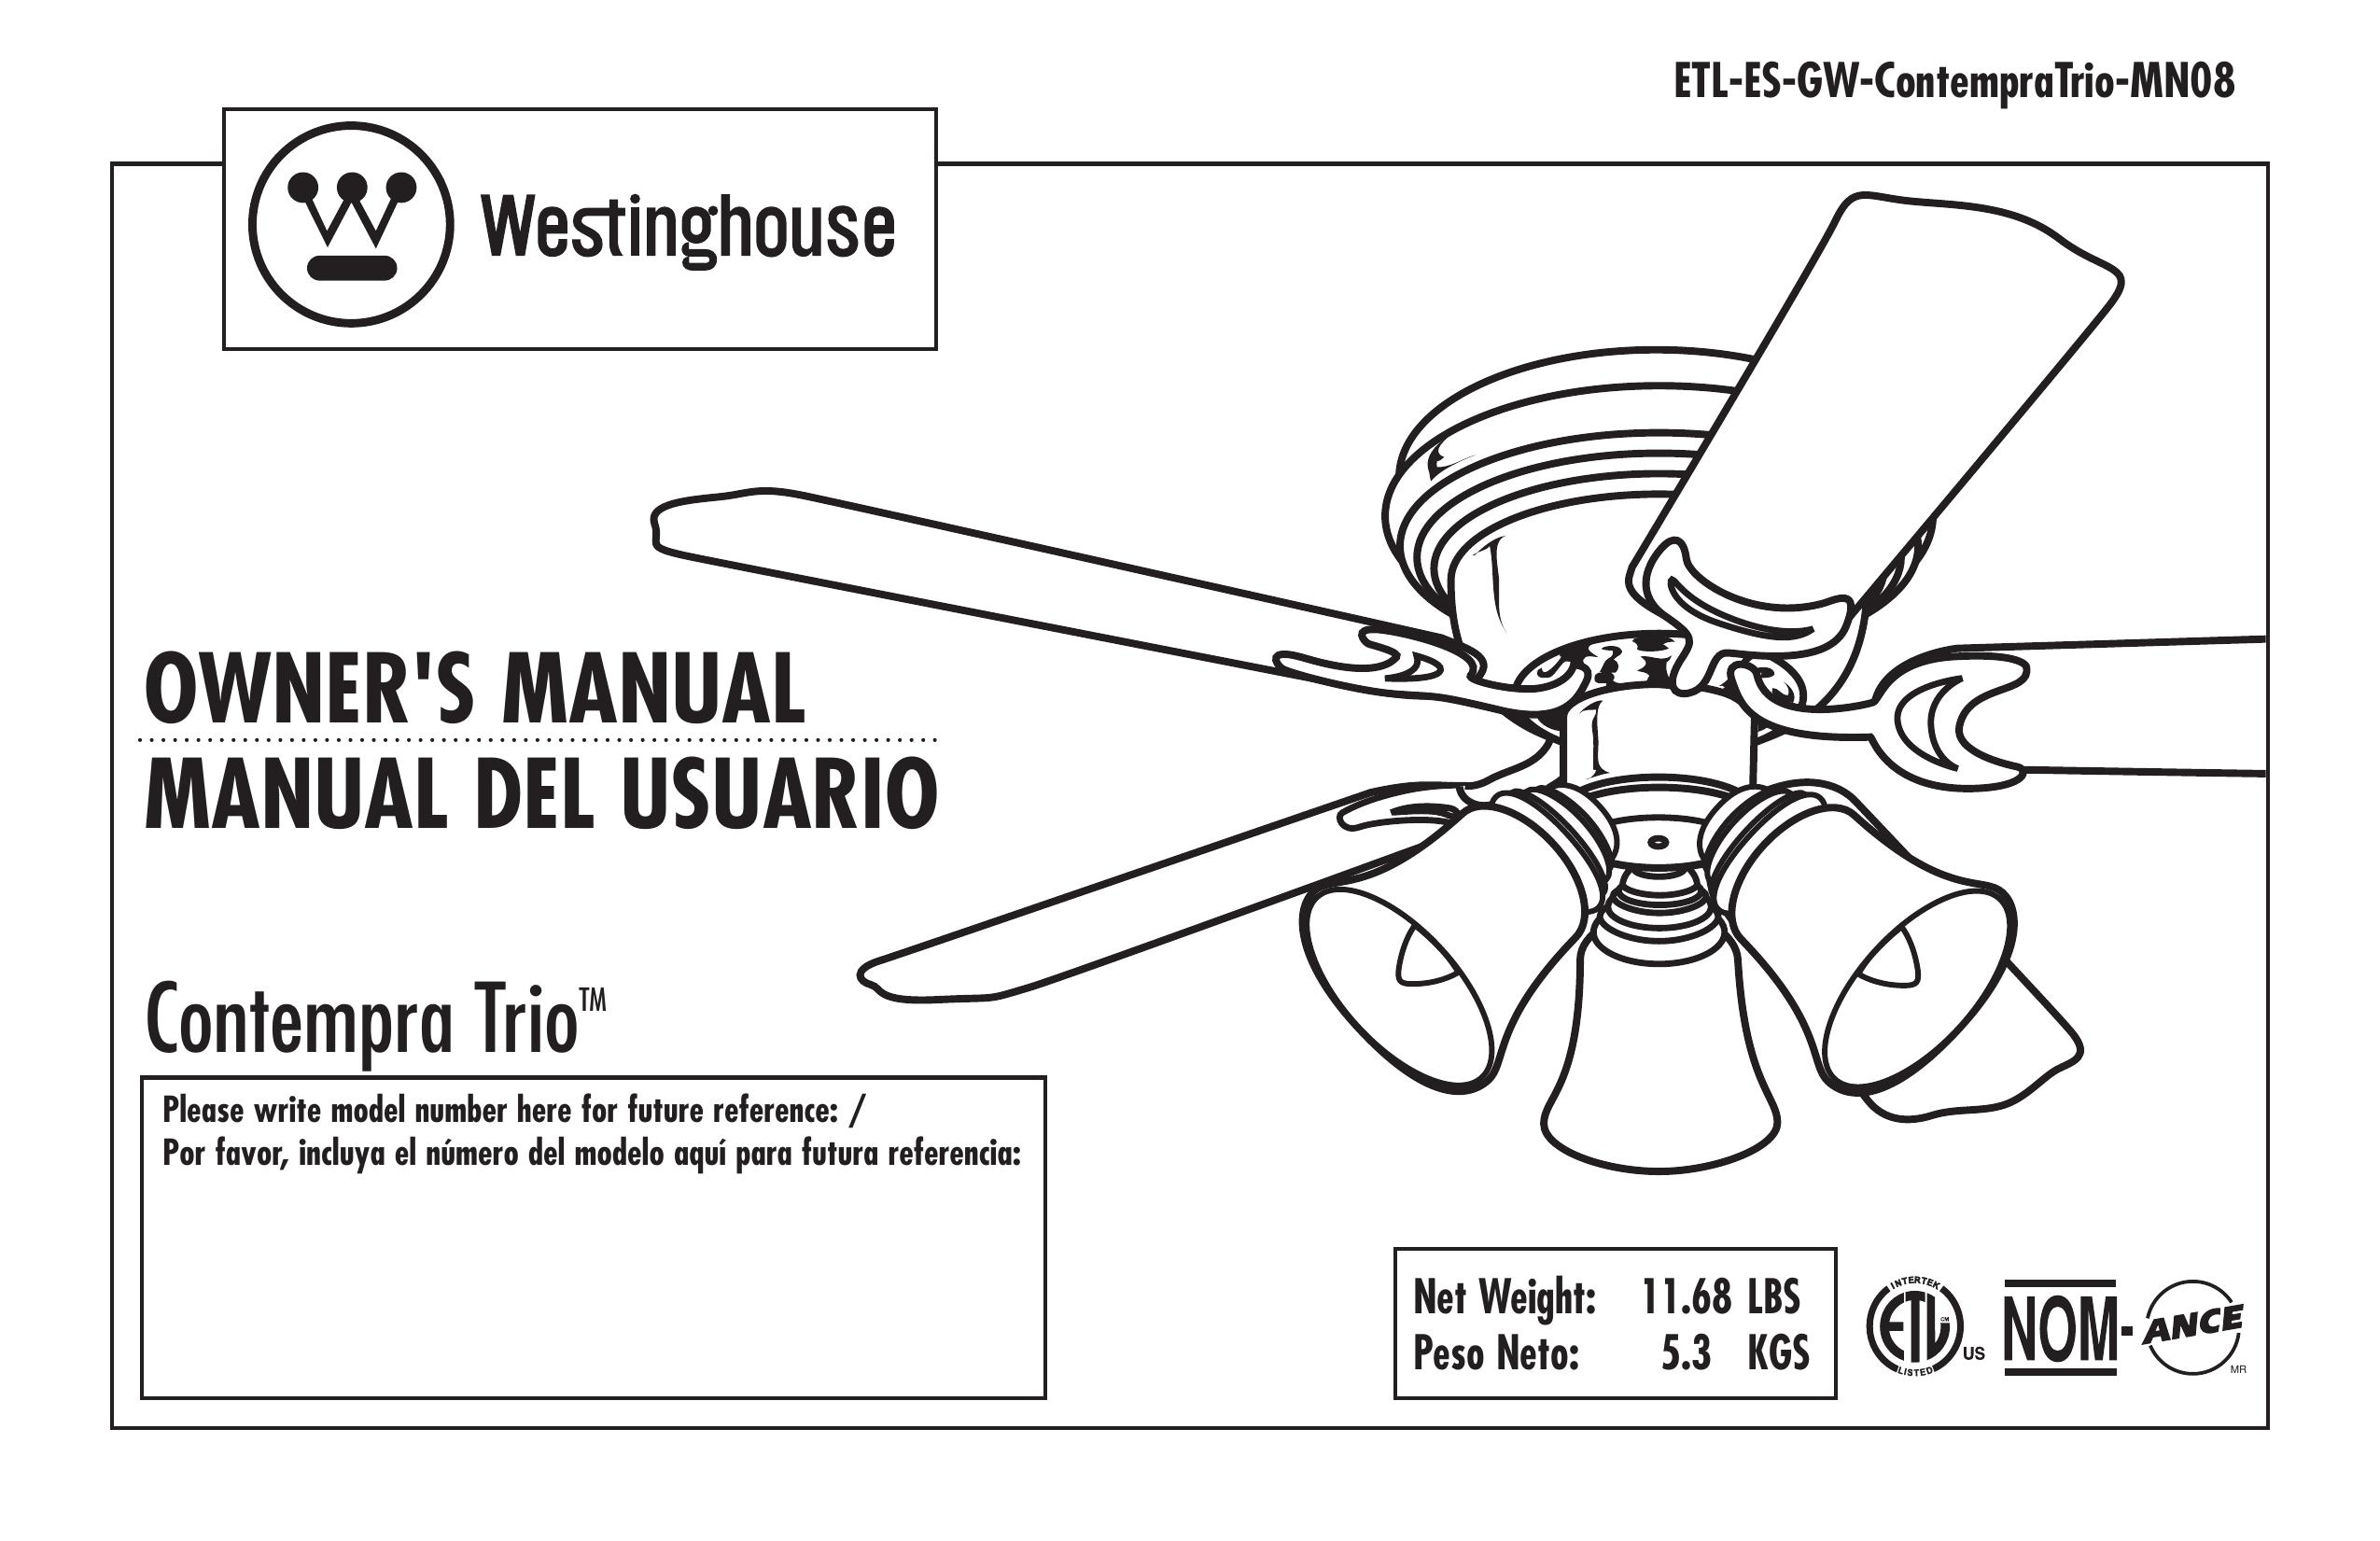 Westinghouse ETL-ES-GW-ContempraTrio-MN08 Outdoor Ceiling Fan User Manual